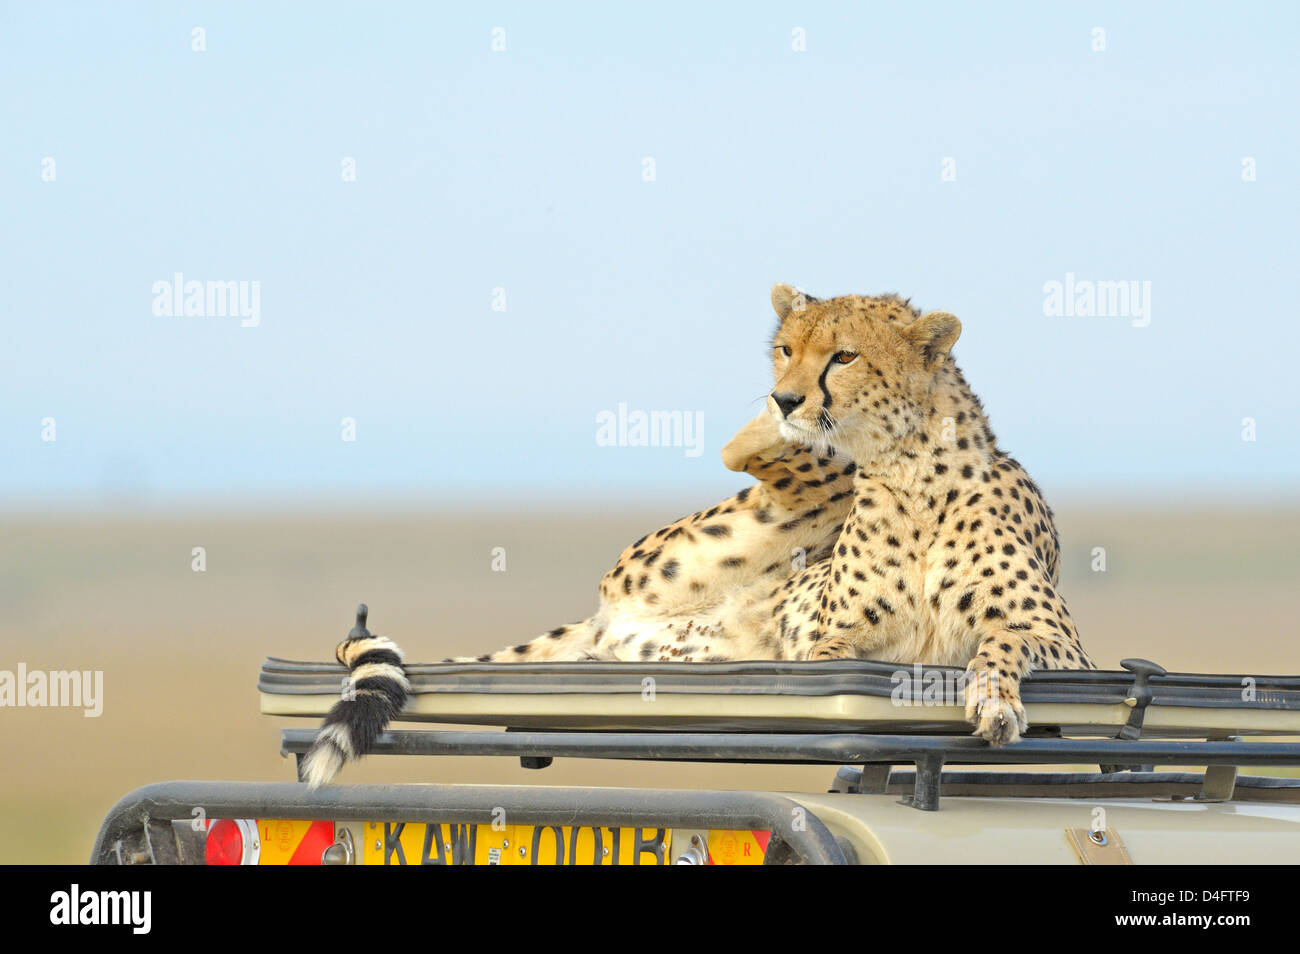 Wild Cheetah on top of a tourist vehicle in Masai Mara, Kenya, Africa Stock Photo